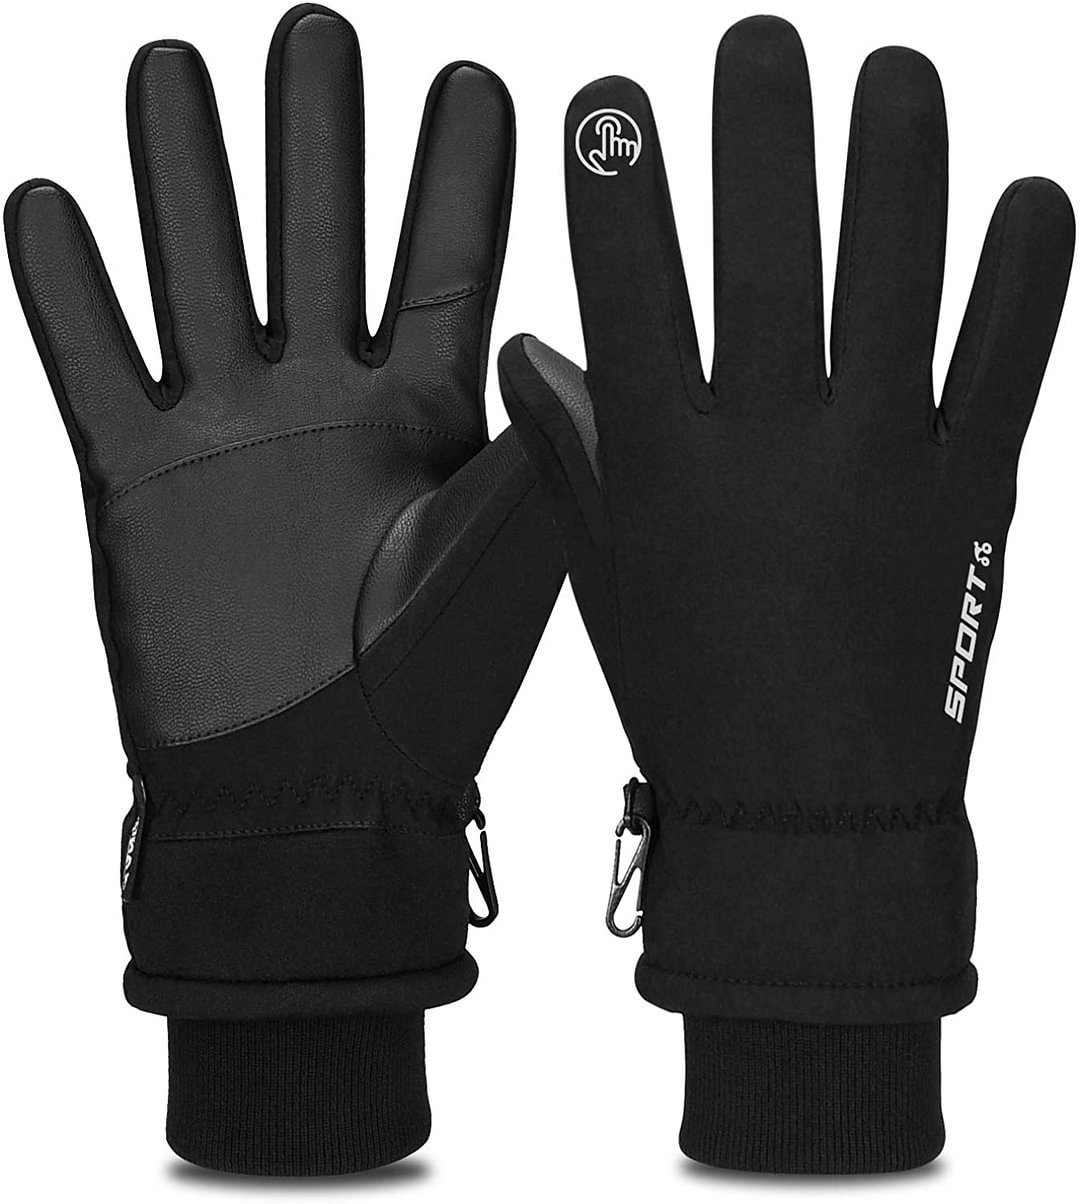 Yobenki Winter Gloves, -30°F Touch Screen Thermal Gloves Windproof Warm Gloves Men Women